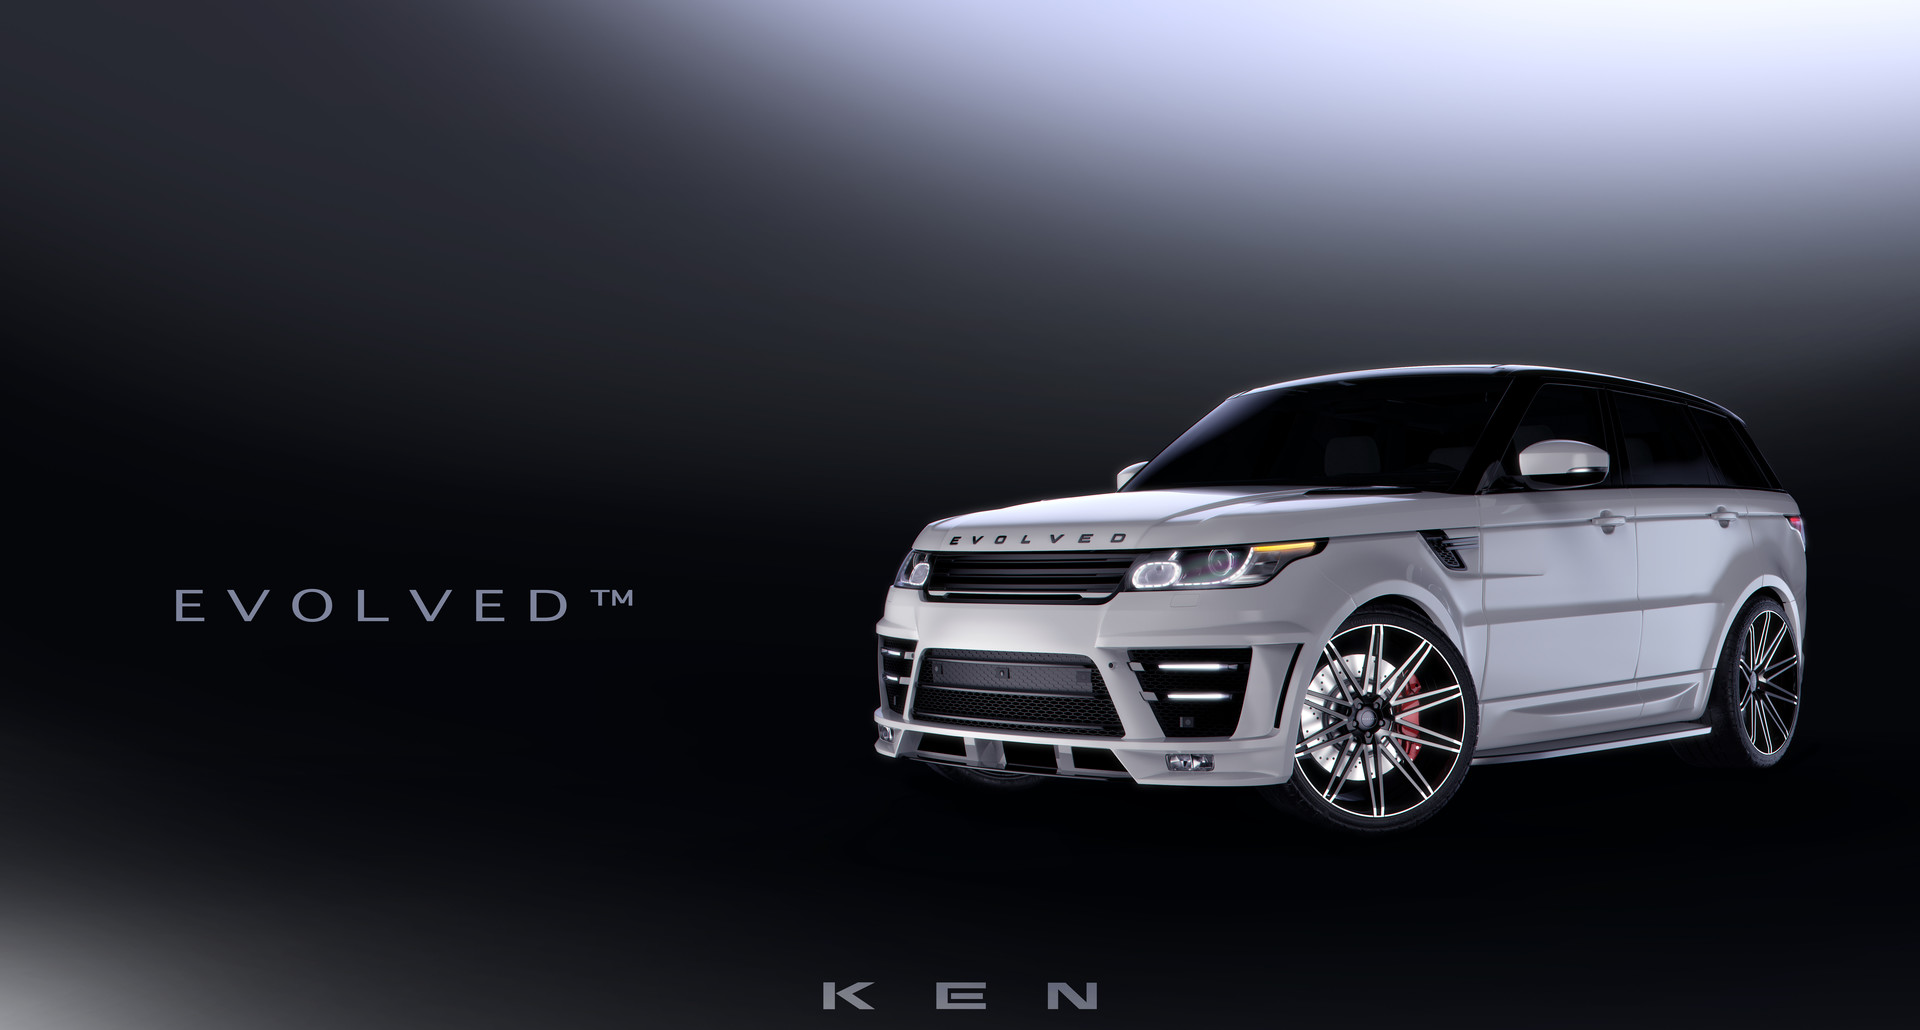 ArtStation - E V O L V E D™ Range Rover Sport by K E N | Automotive Designs